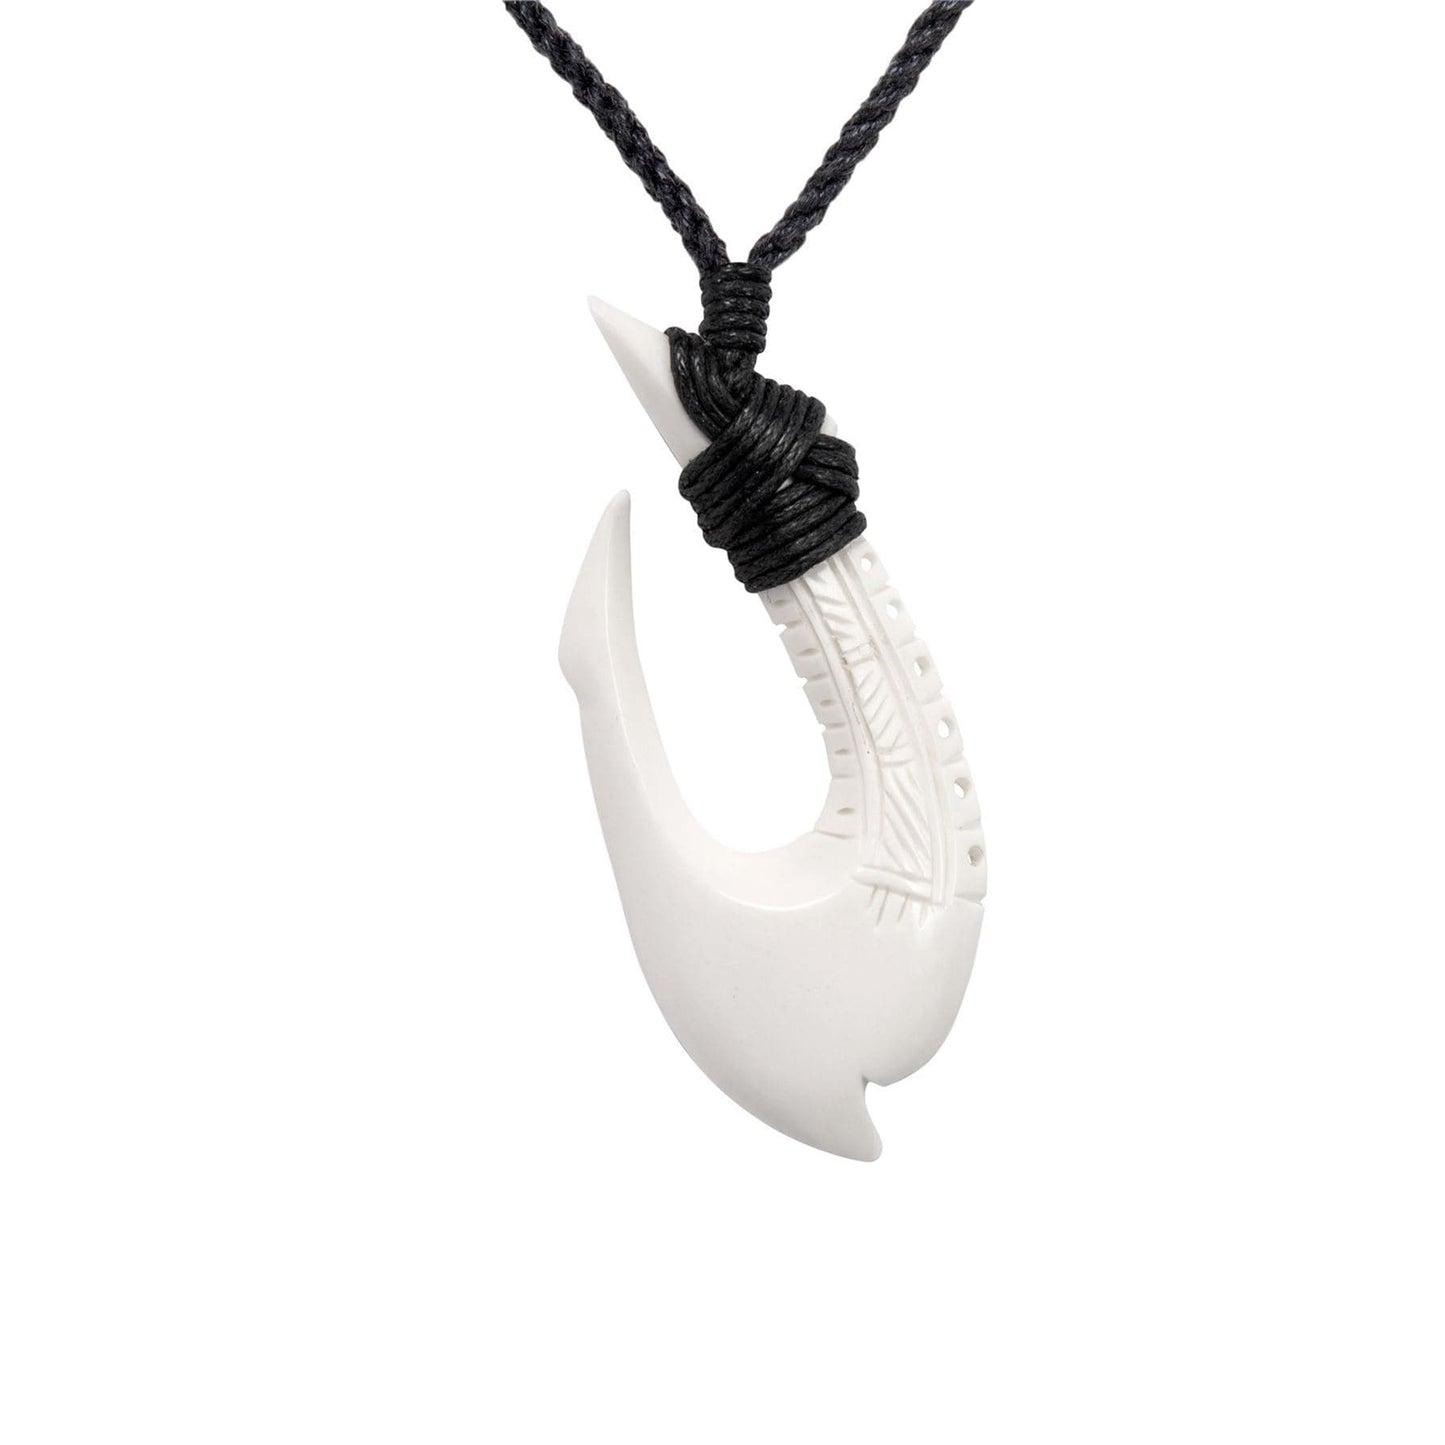 Bone Maori Style Hei Matau Fish Hook Anchor Pendant Cord Necklace